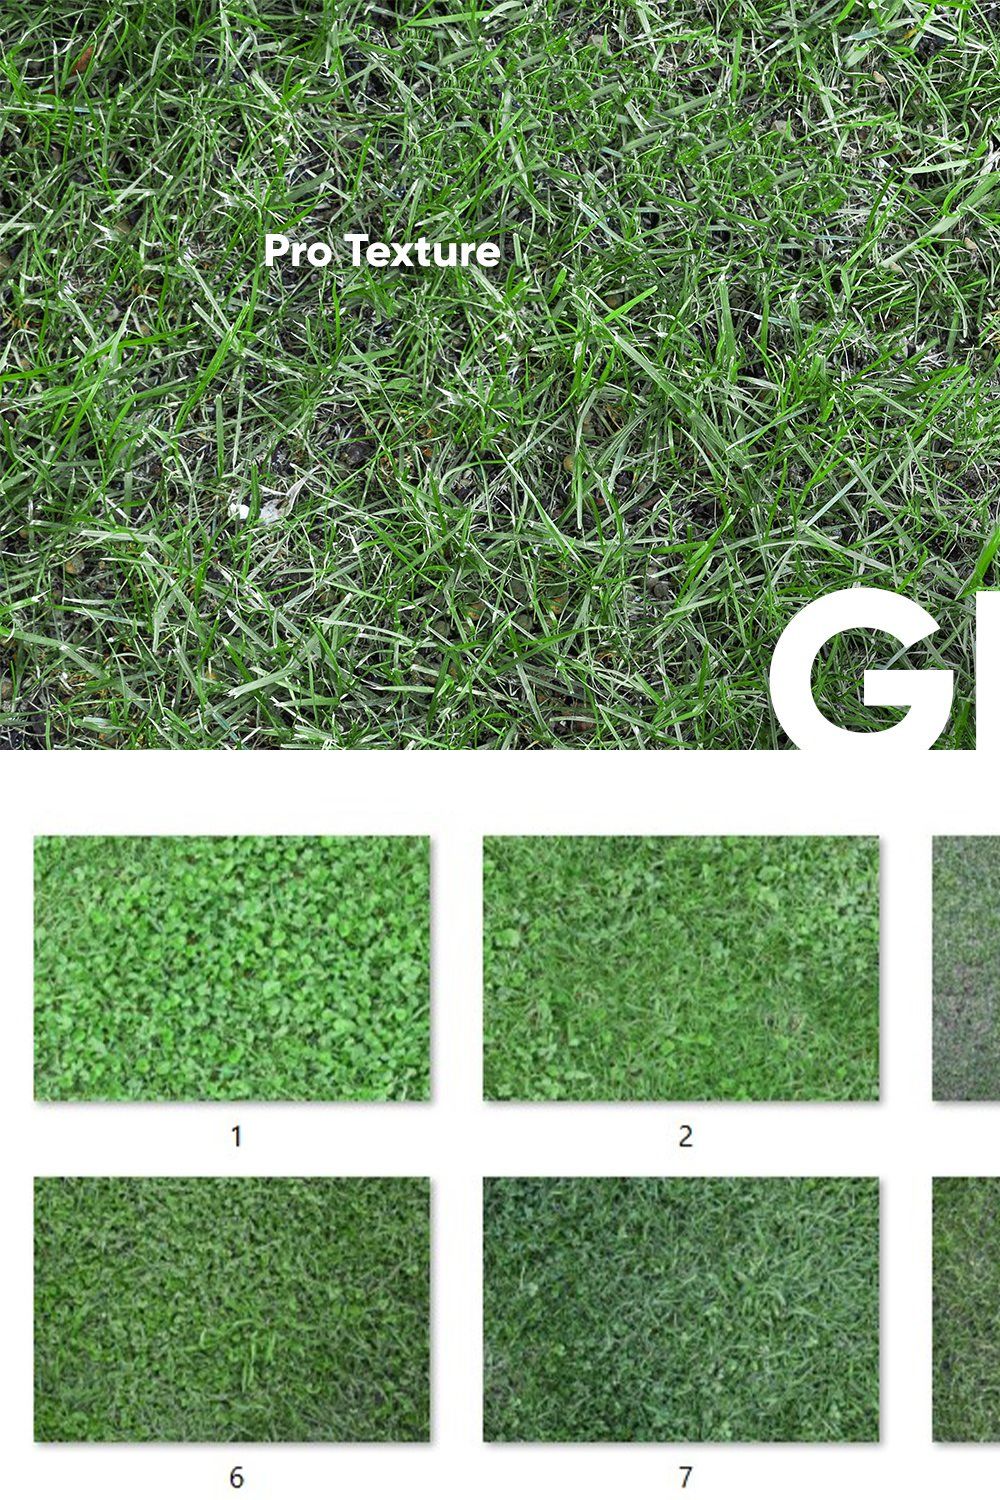 20 Grass Textures HQ pinterest preview image.